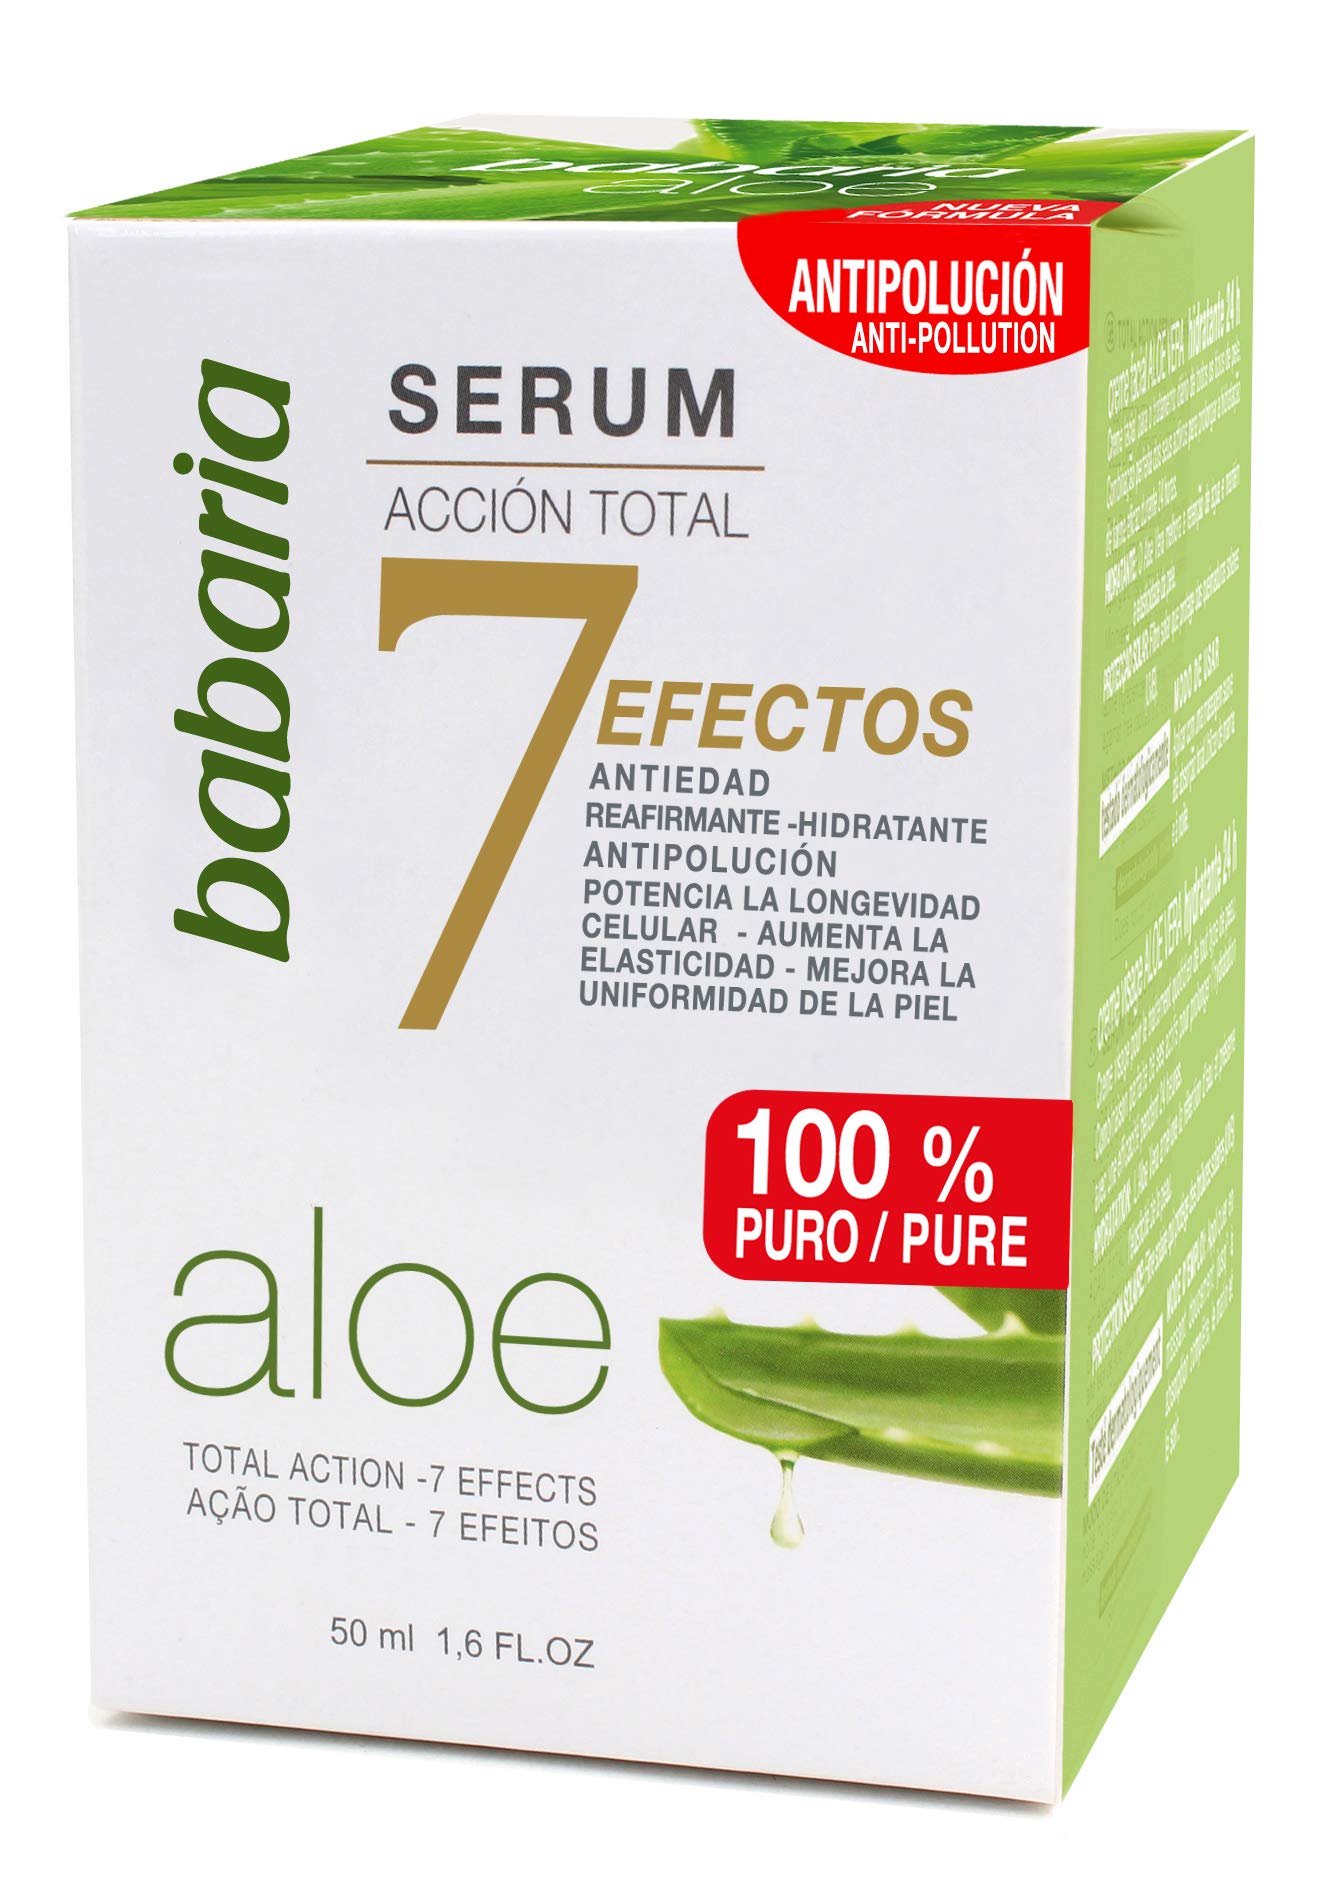 Babaria Serum 7 Efectos Aloe Vera, 50 ml (1er Pack)